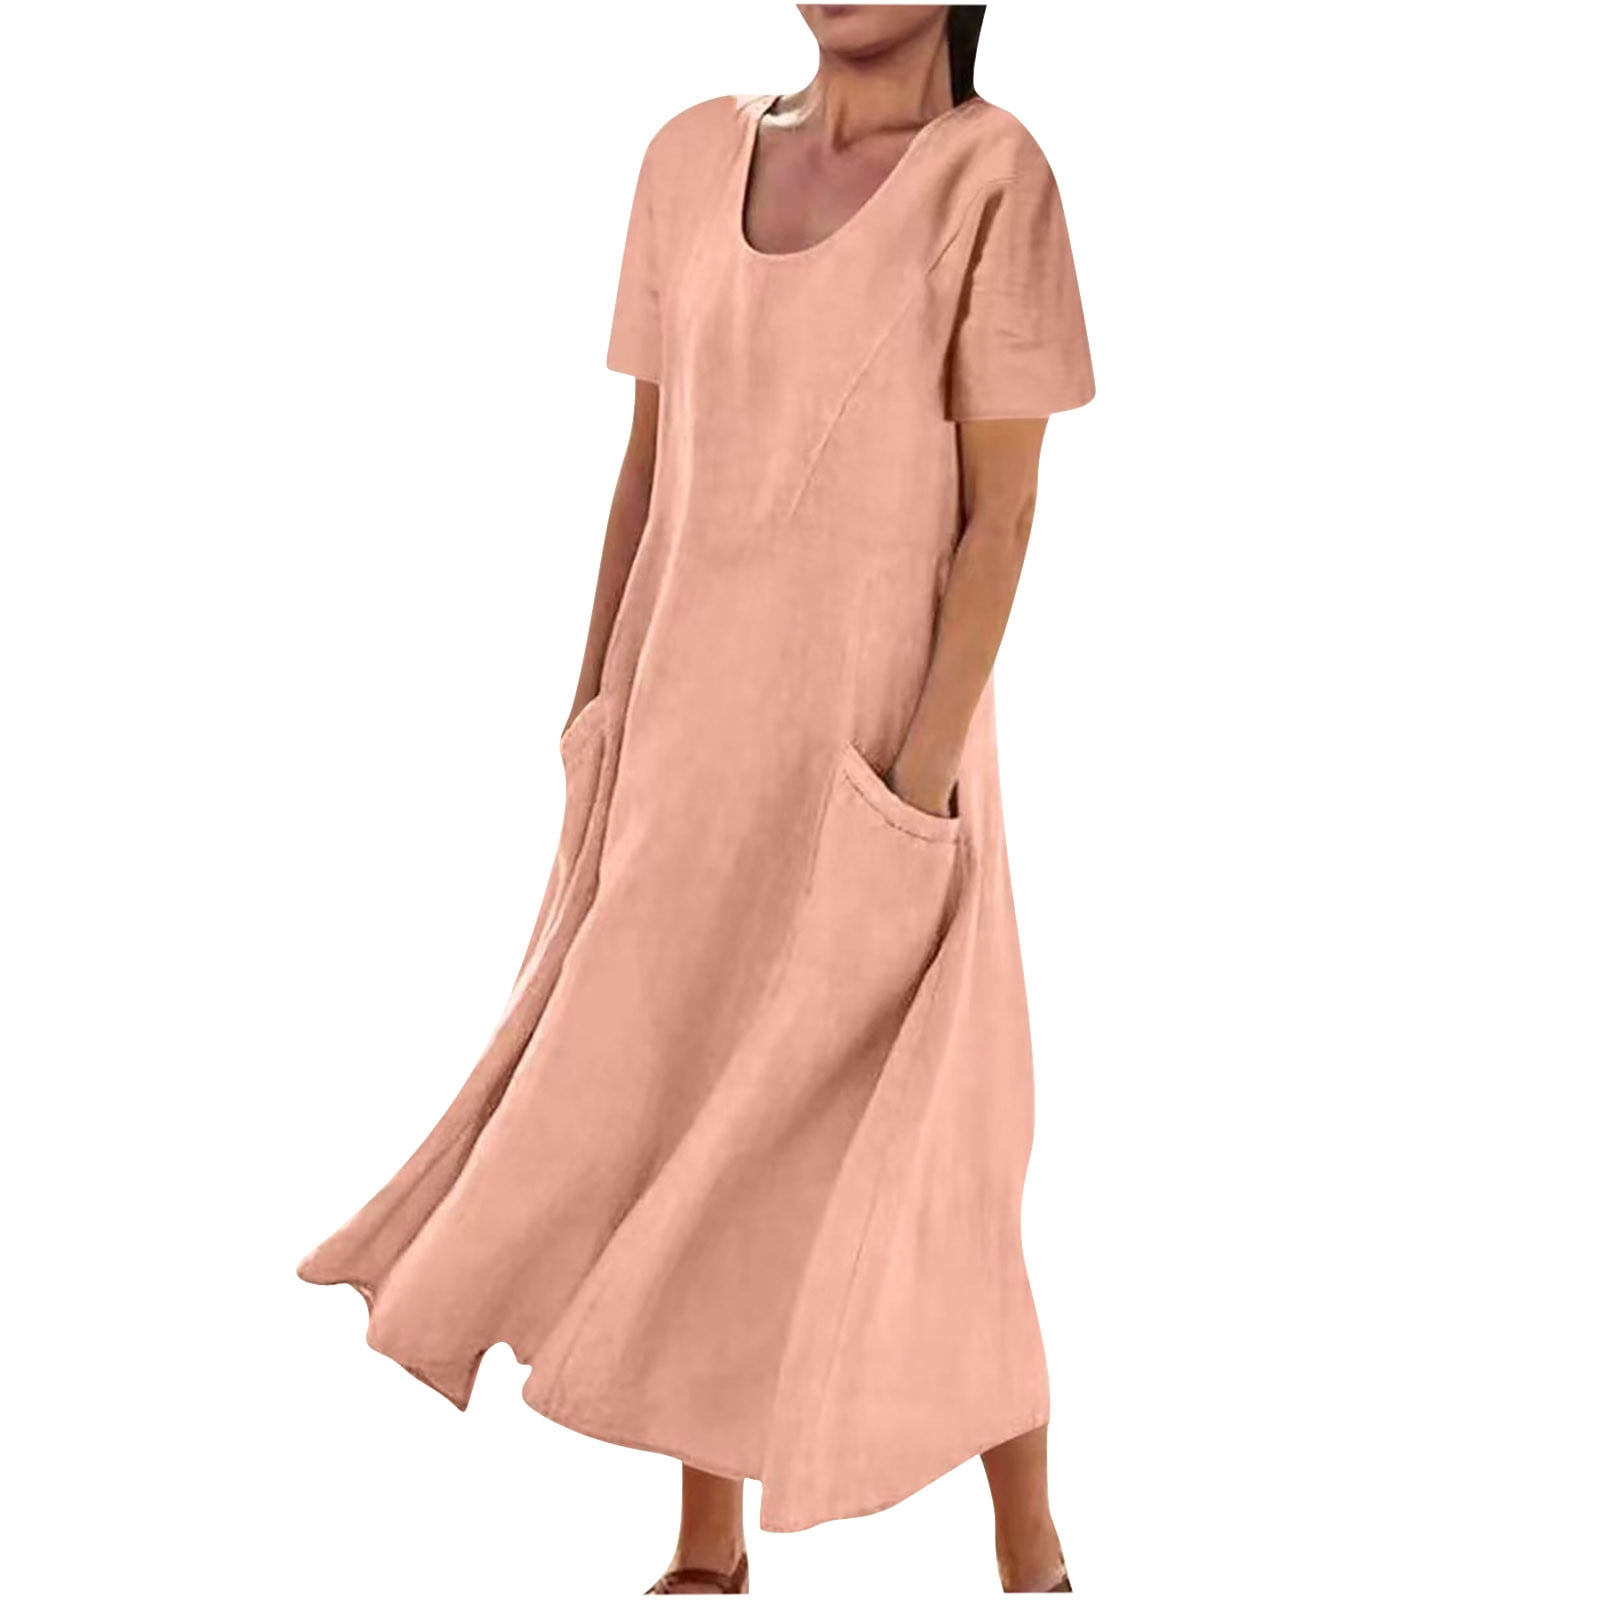 Finelylove Plus Size Pink Dresses For Curvy Women Long Summer